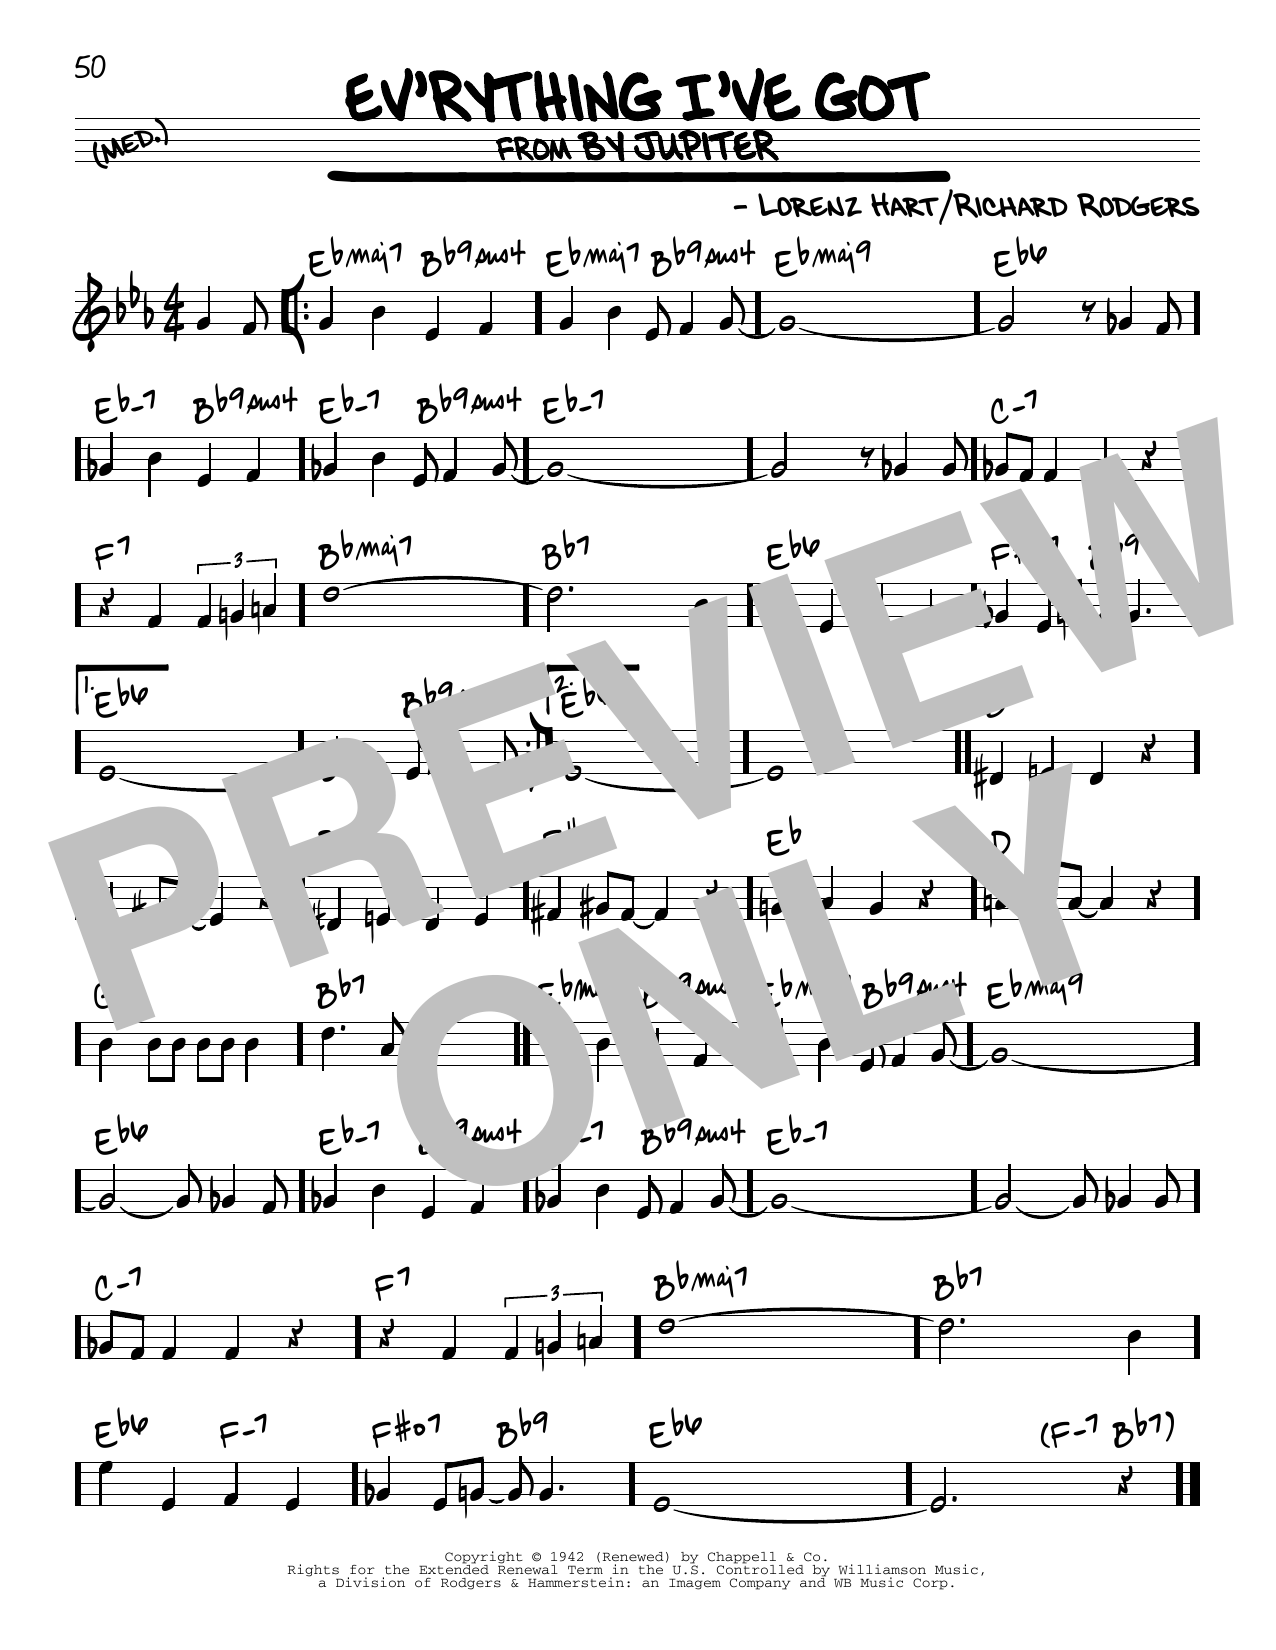 Rodgers & Hart Ev'rything I've Got Sheet Music Notes & Chords for Melody Line, Lyrics & Chords - Download or Print PDF